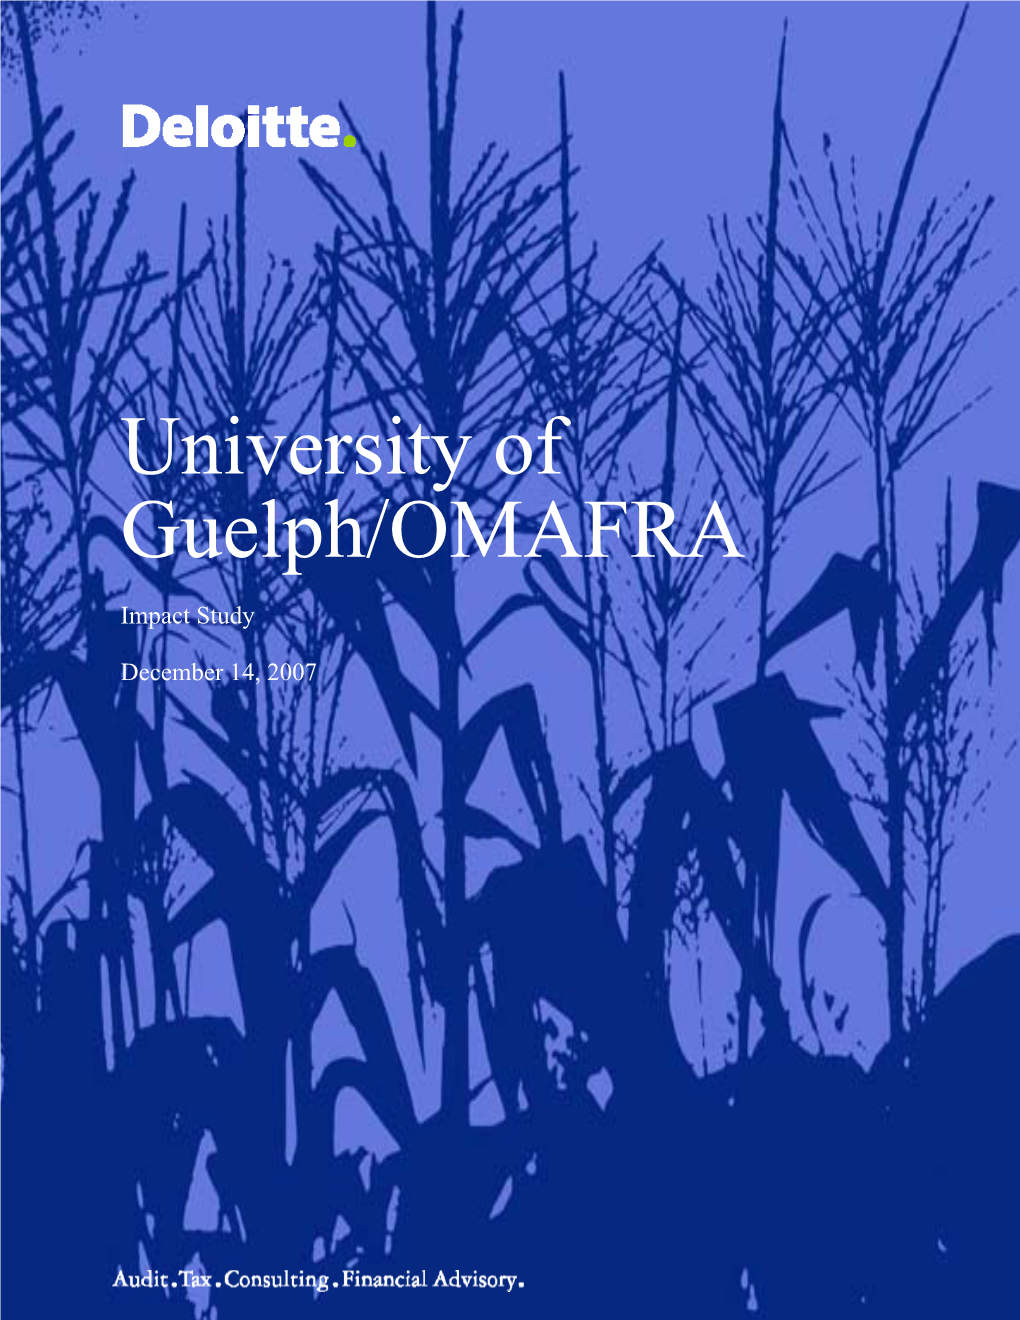 U of G/OMAFRA